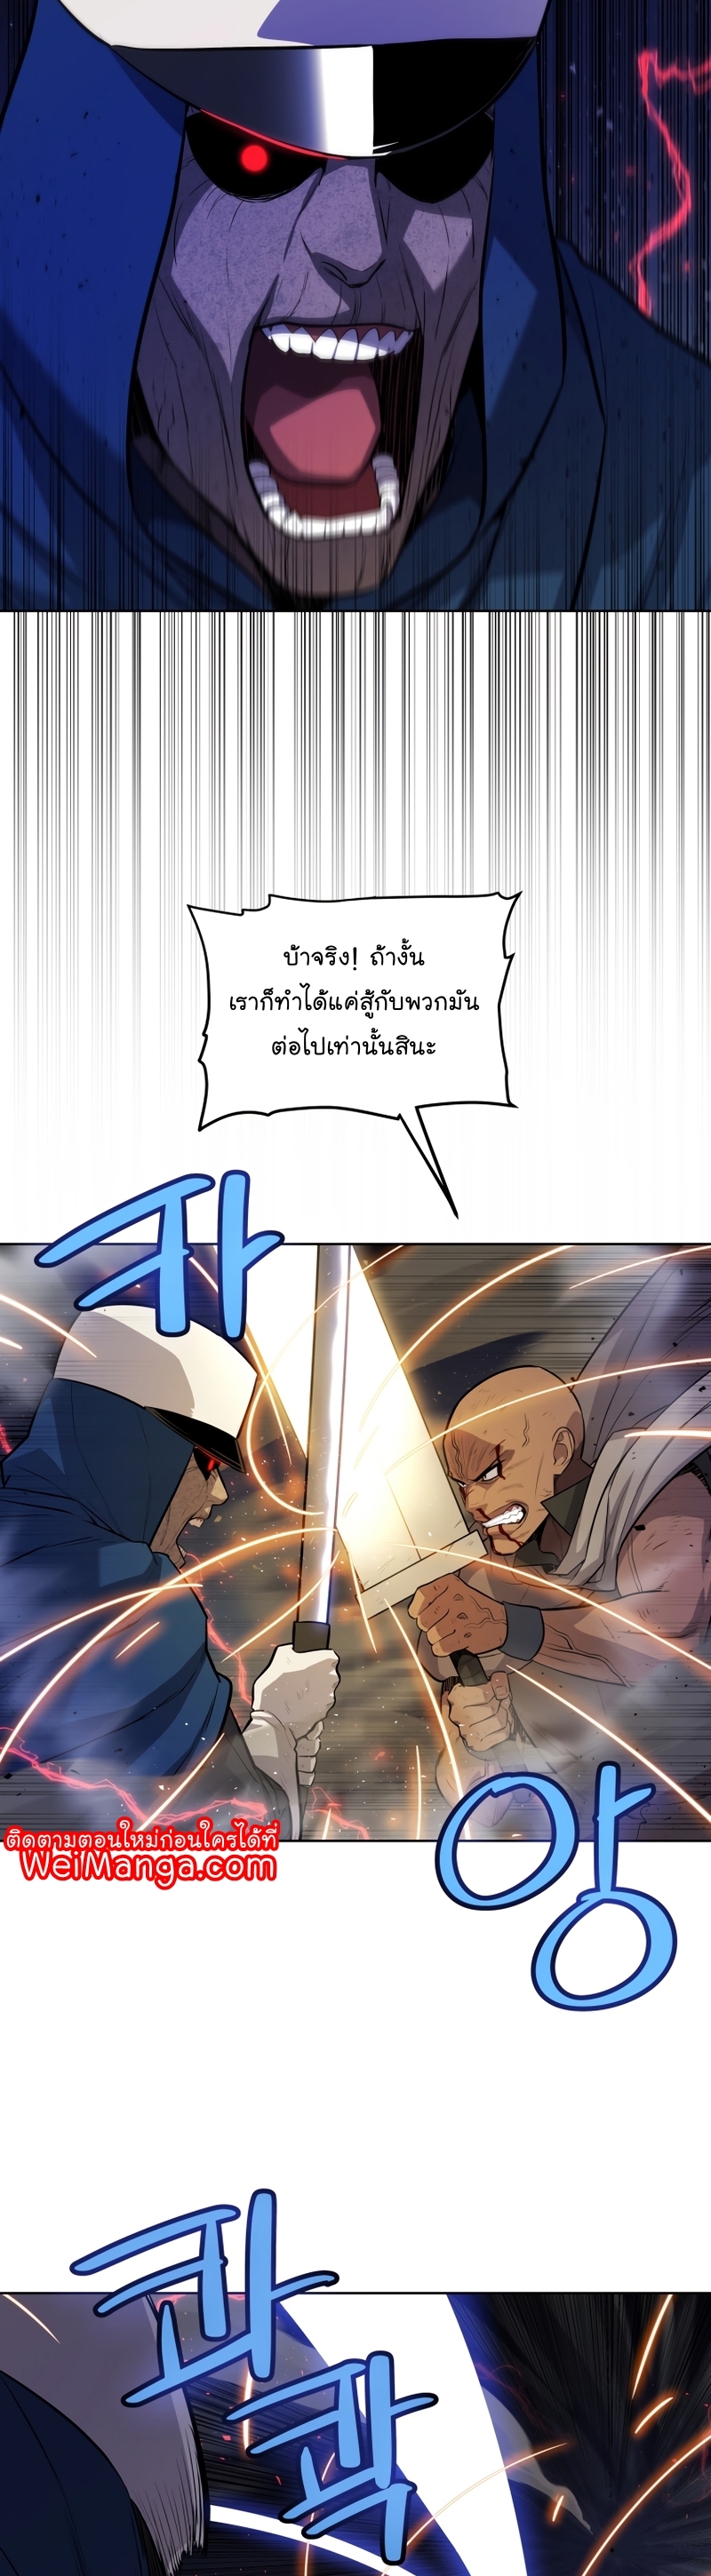 Overpower Sword Manga Wei 77 (24)